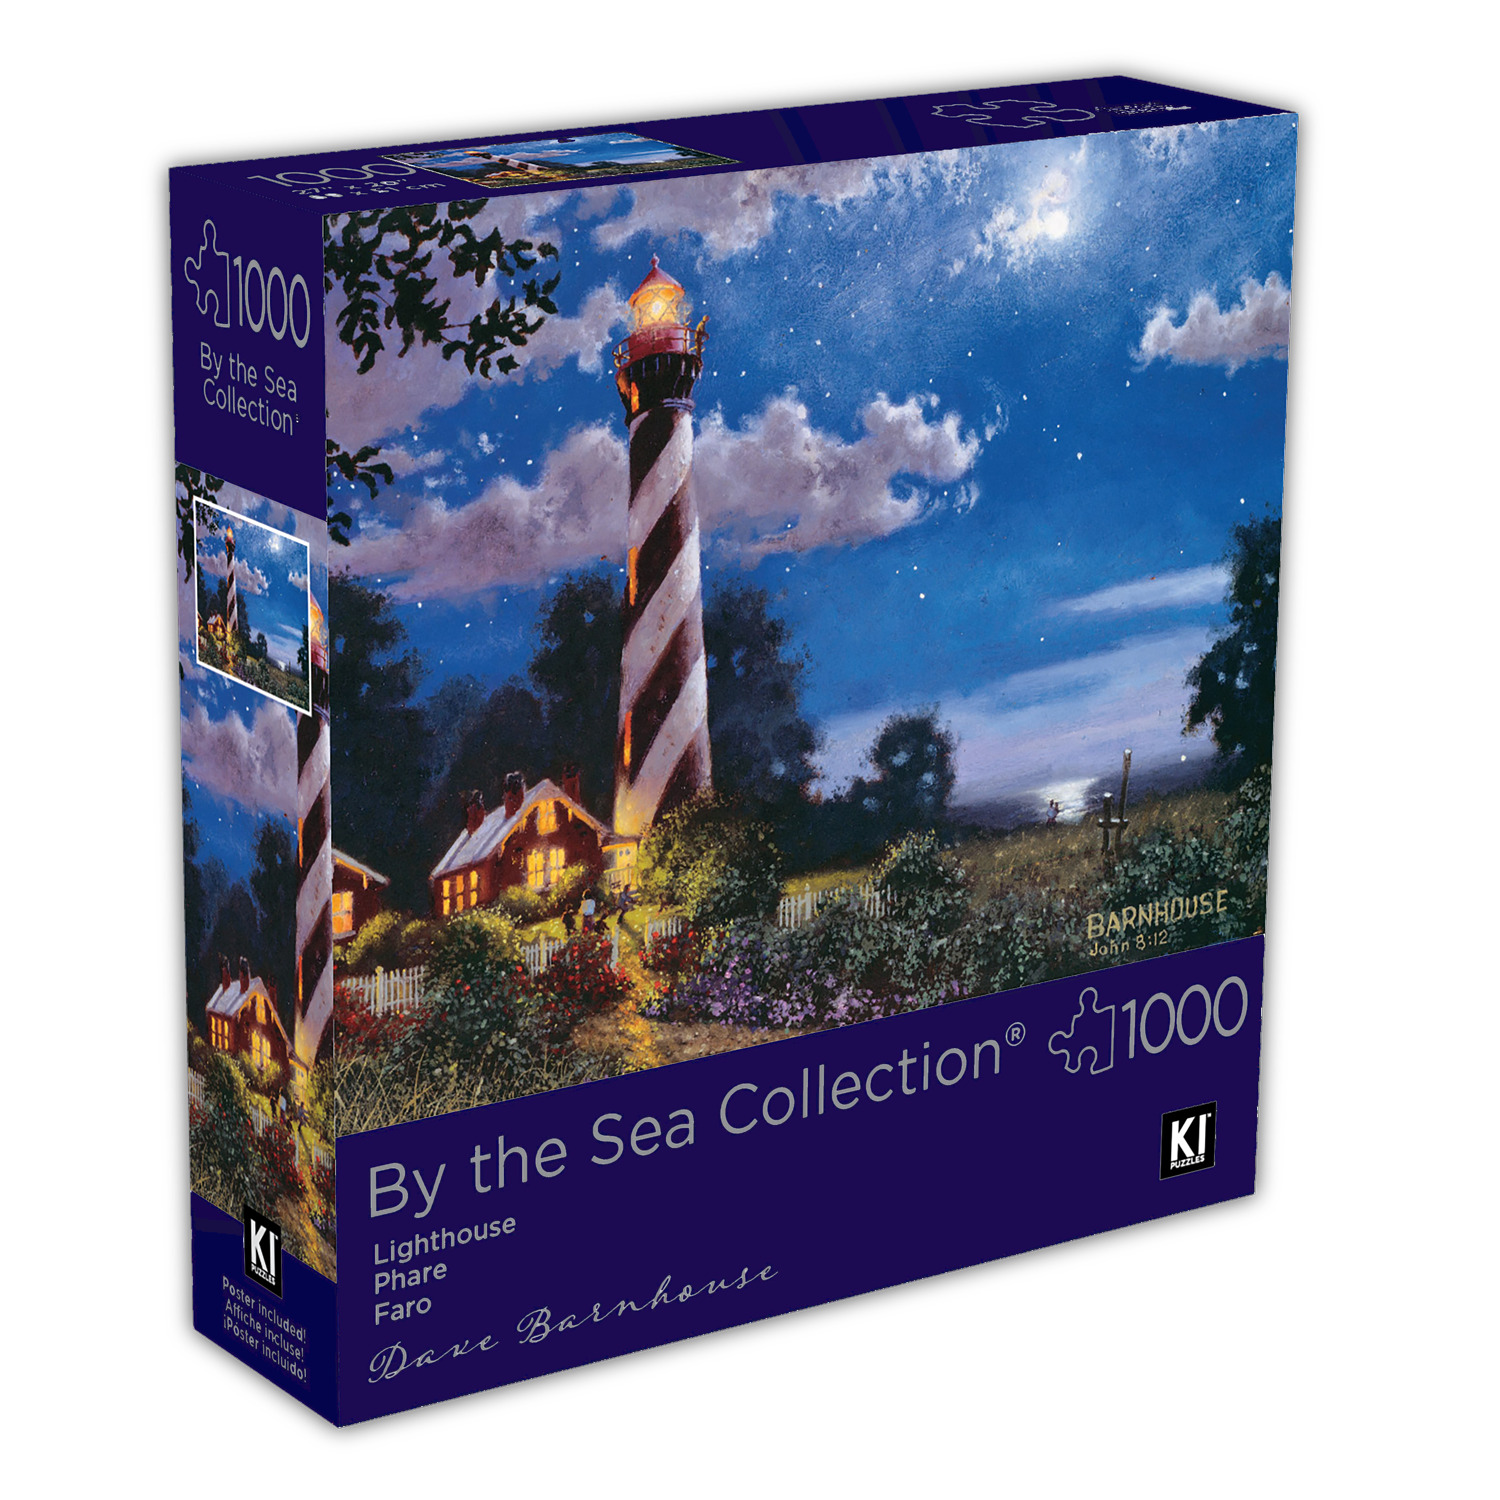 KI - By the Sea Collection - Dave Barnhouse, Phare, 1000 mcx